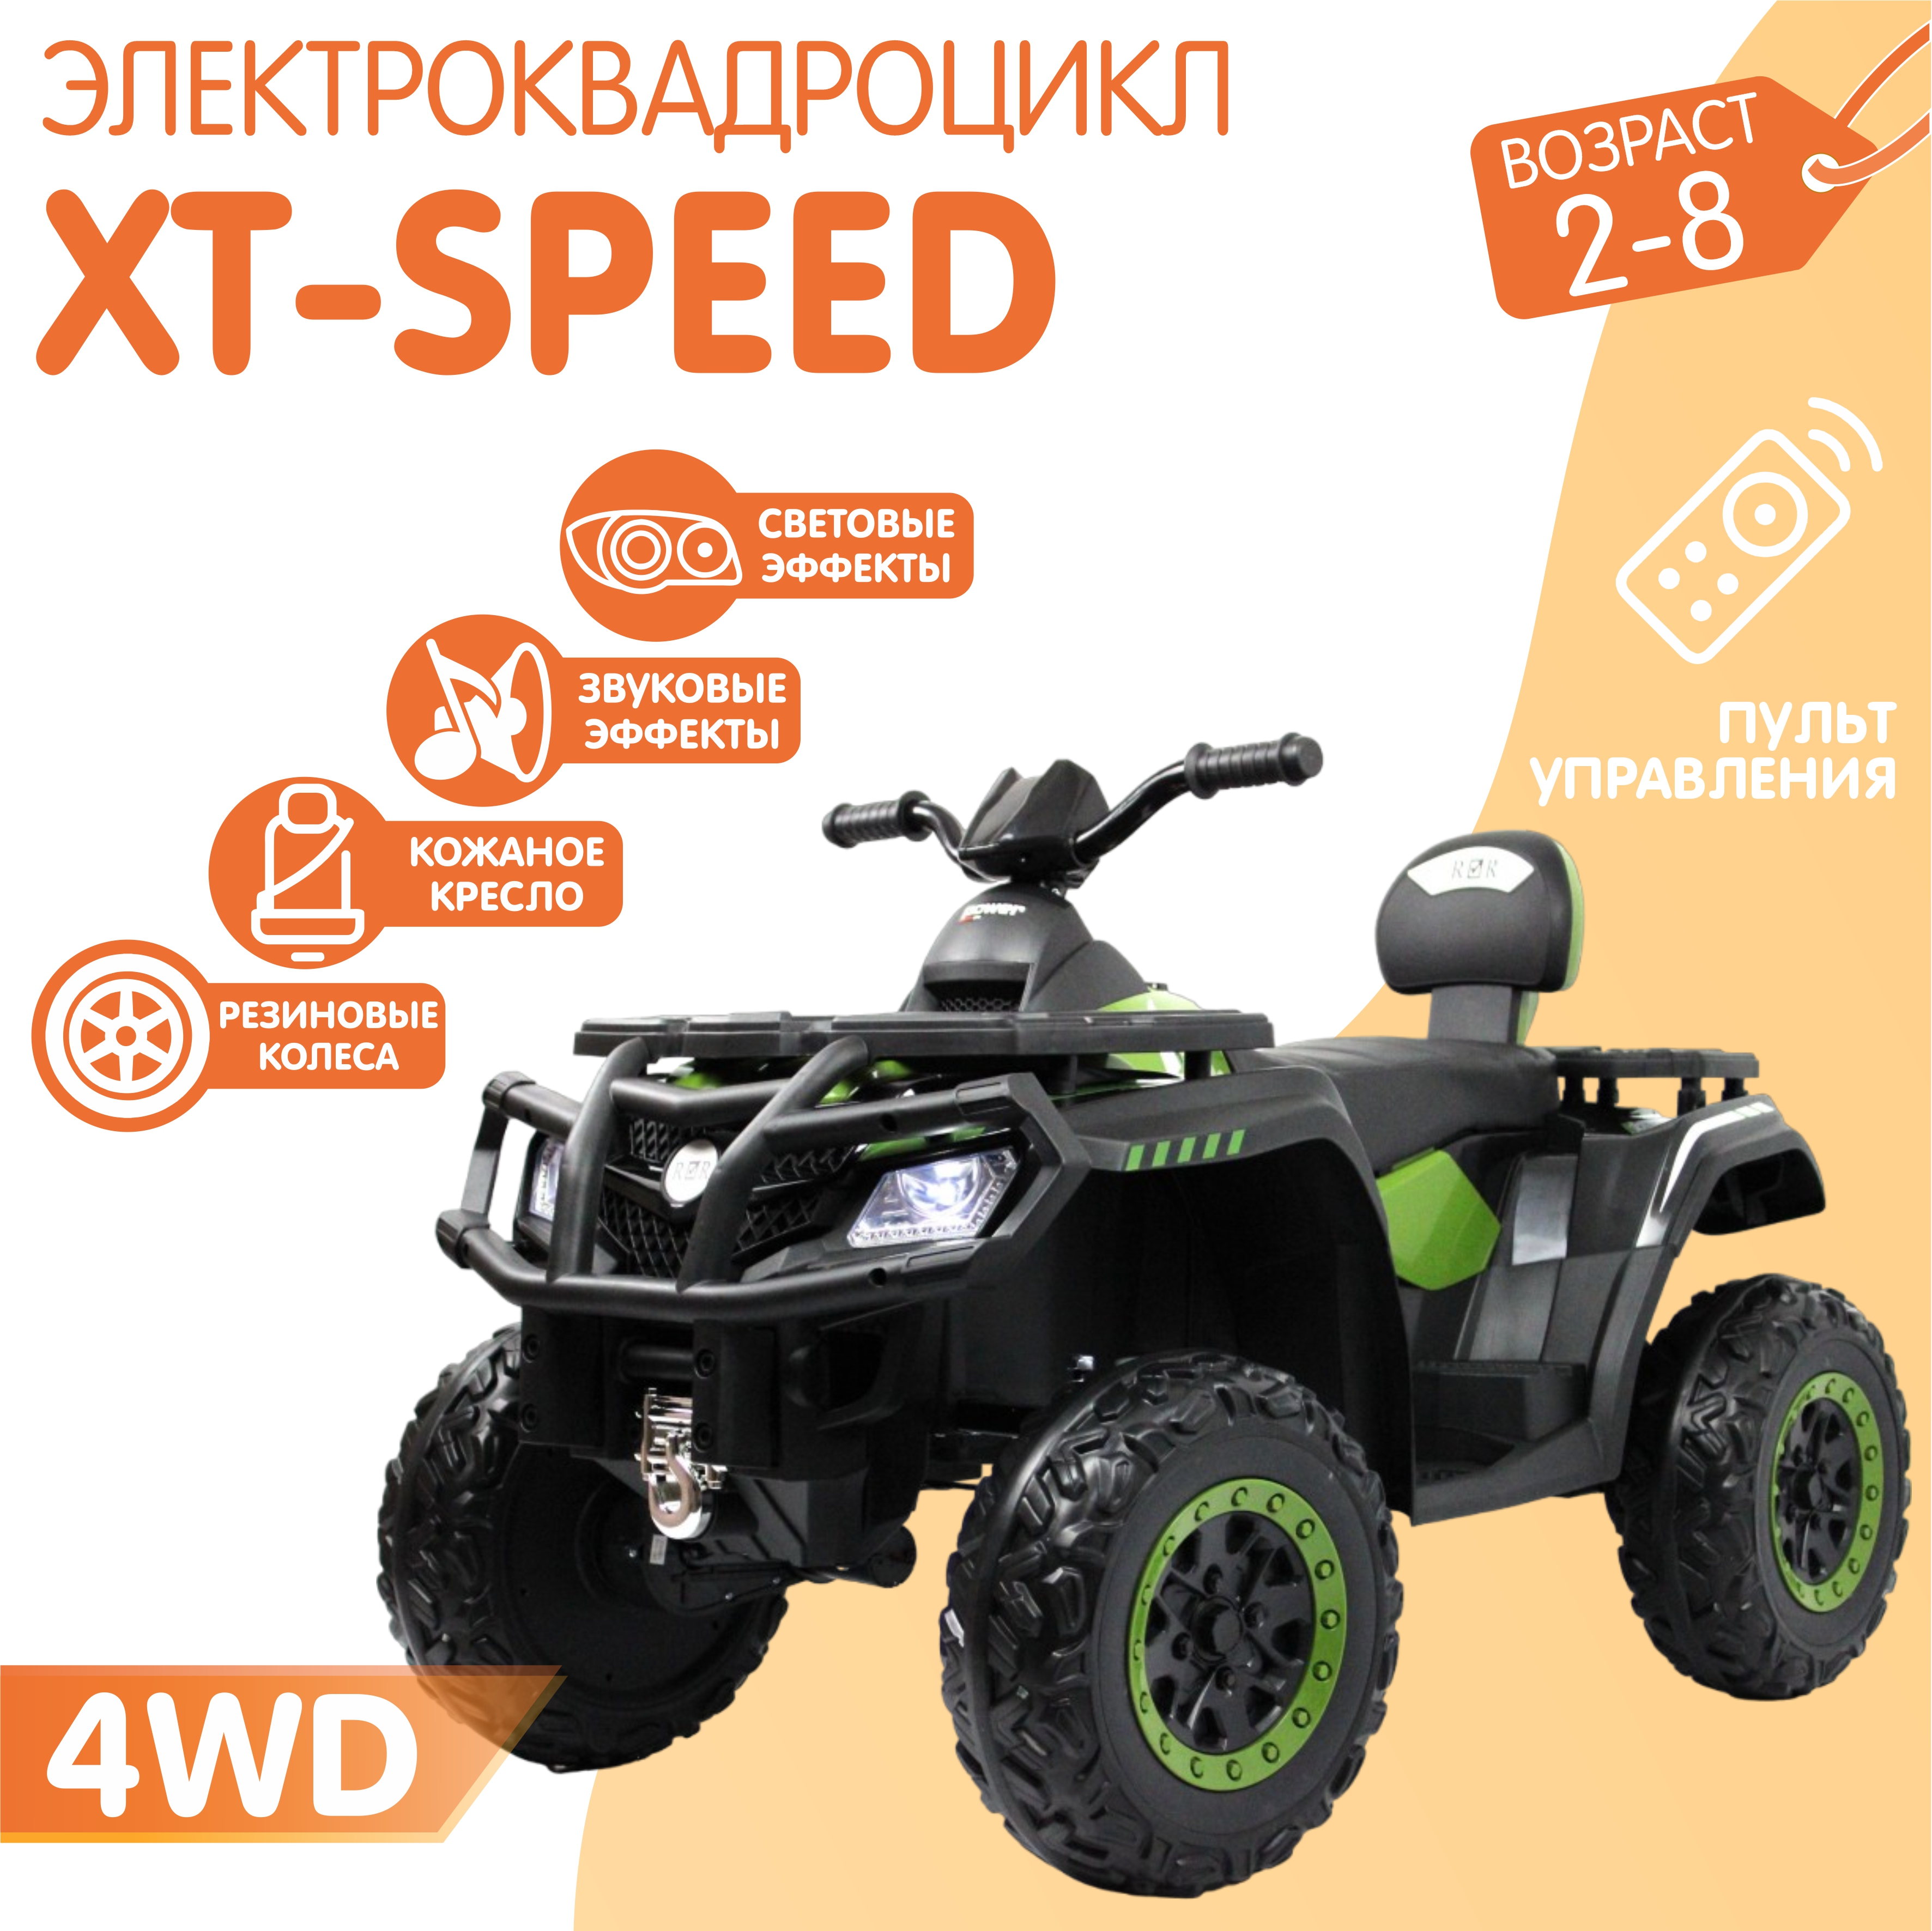 Электромобиль NOVAKIDS квадроцикл xt-speed 4wd зеленый + пульт